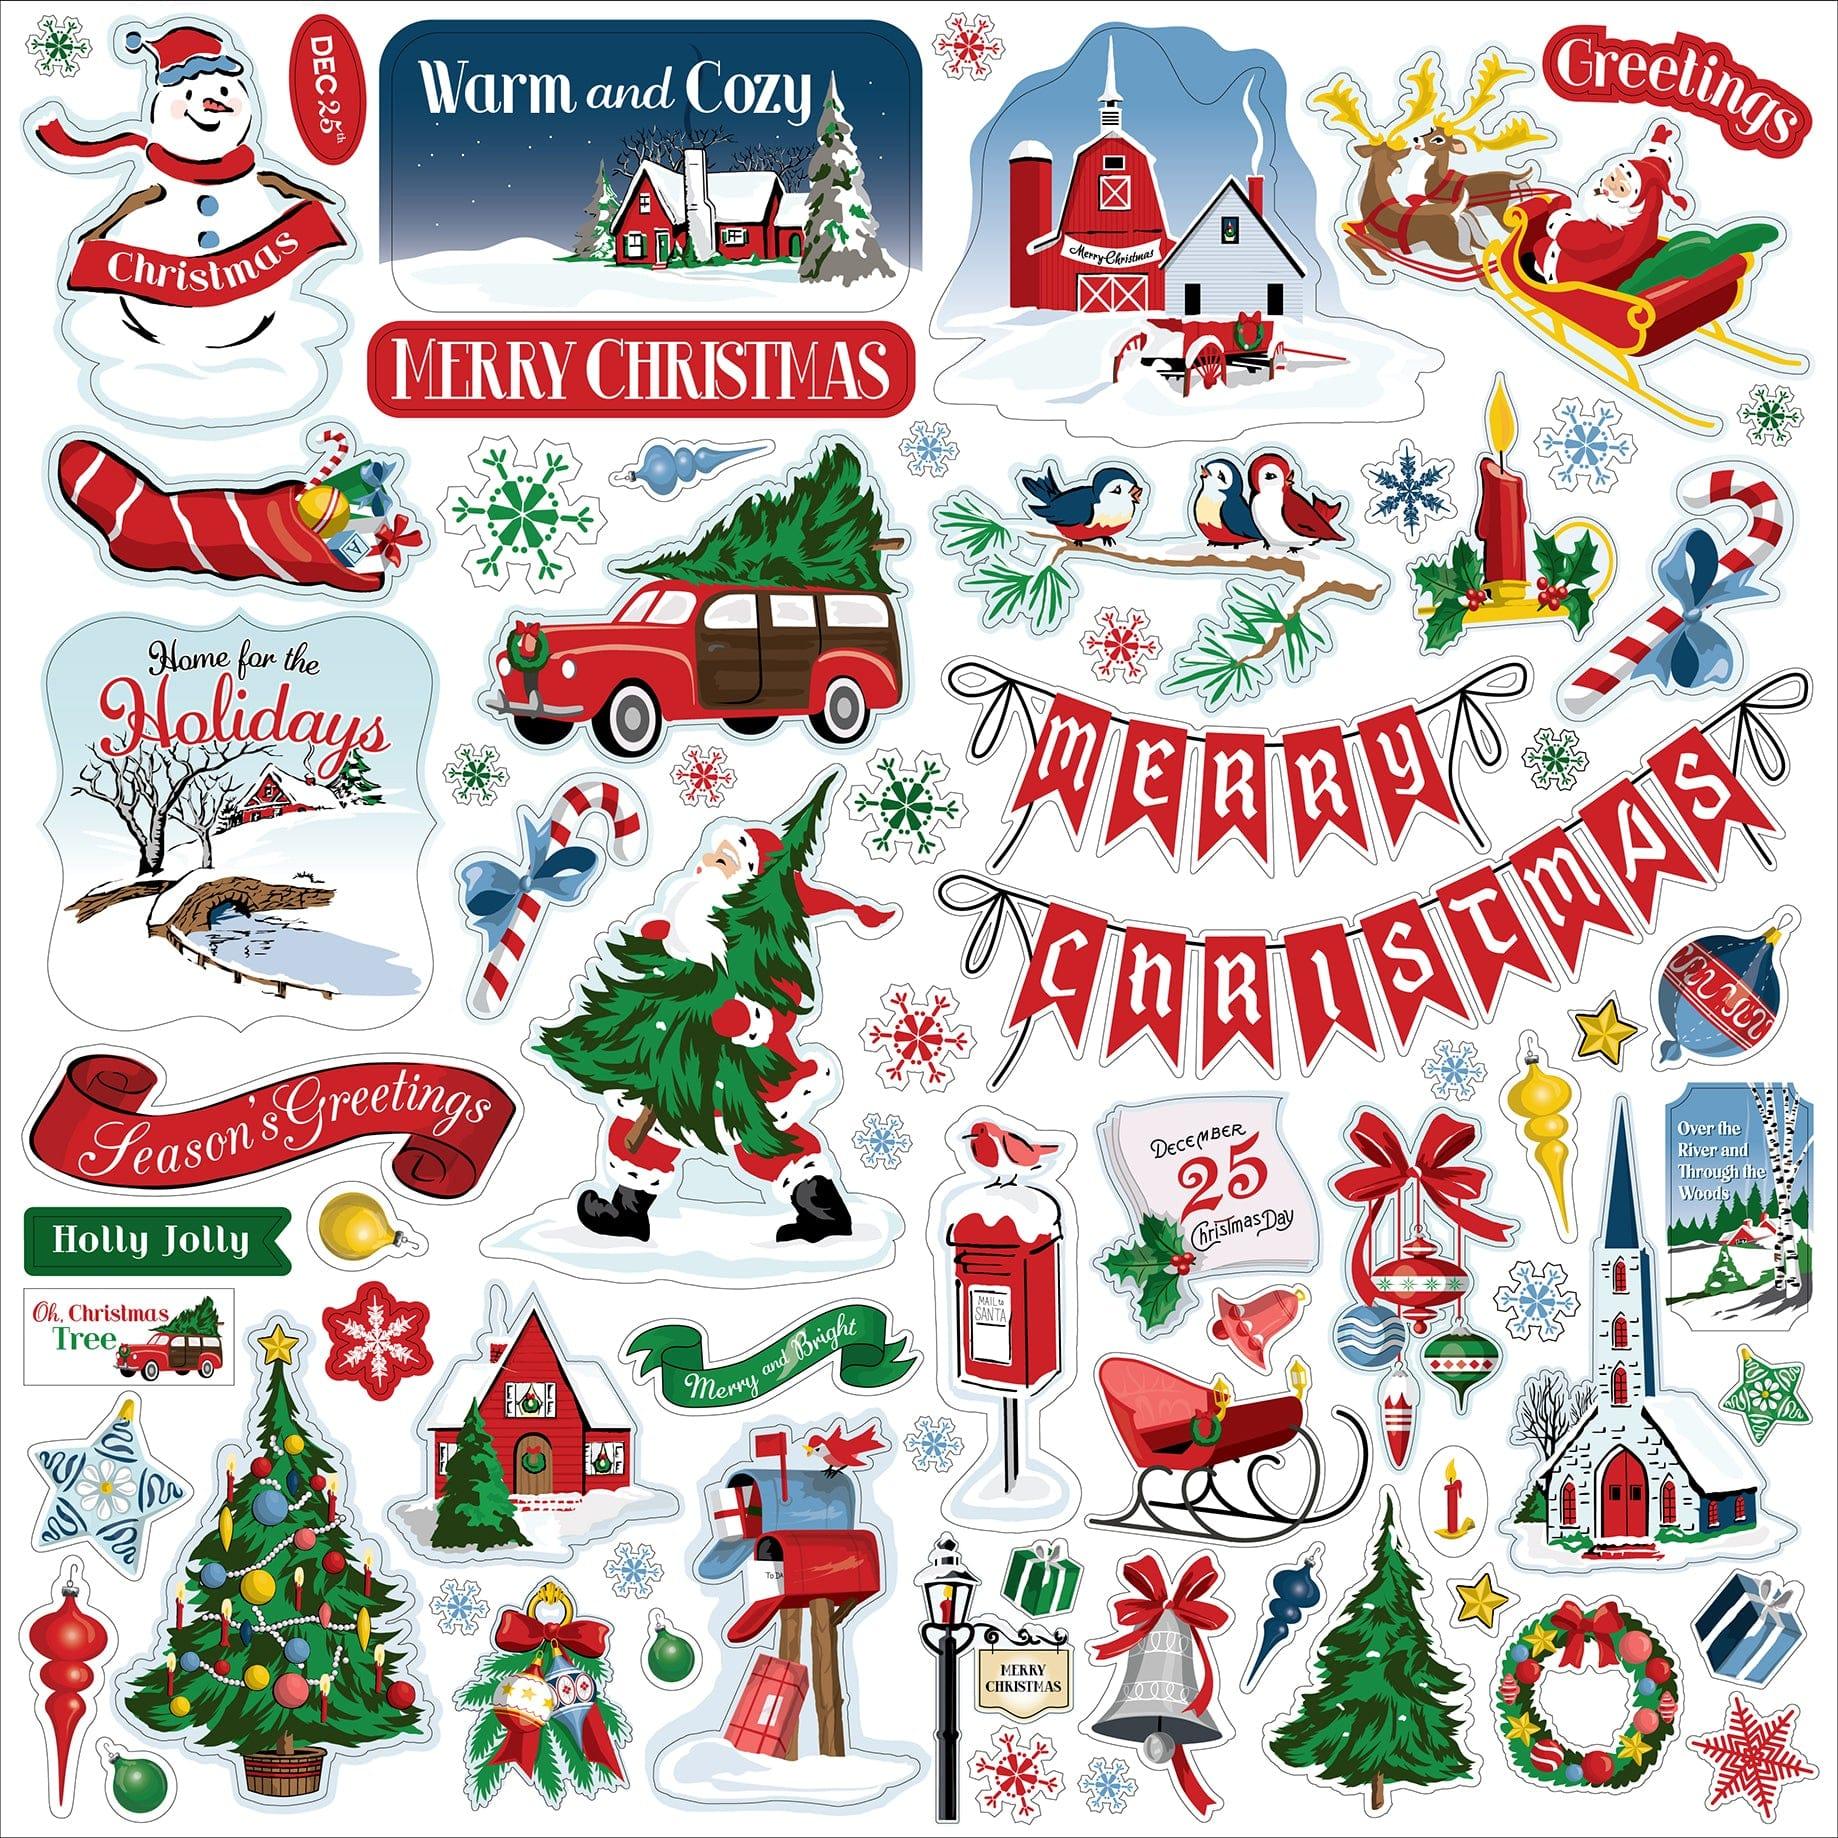 White Christmas Collection 12 x 12 Scrapbook Sticker Sheet by Carta Bella - Scrapbook Supply Companies